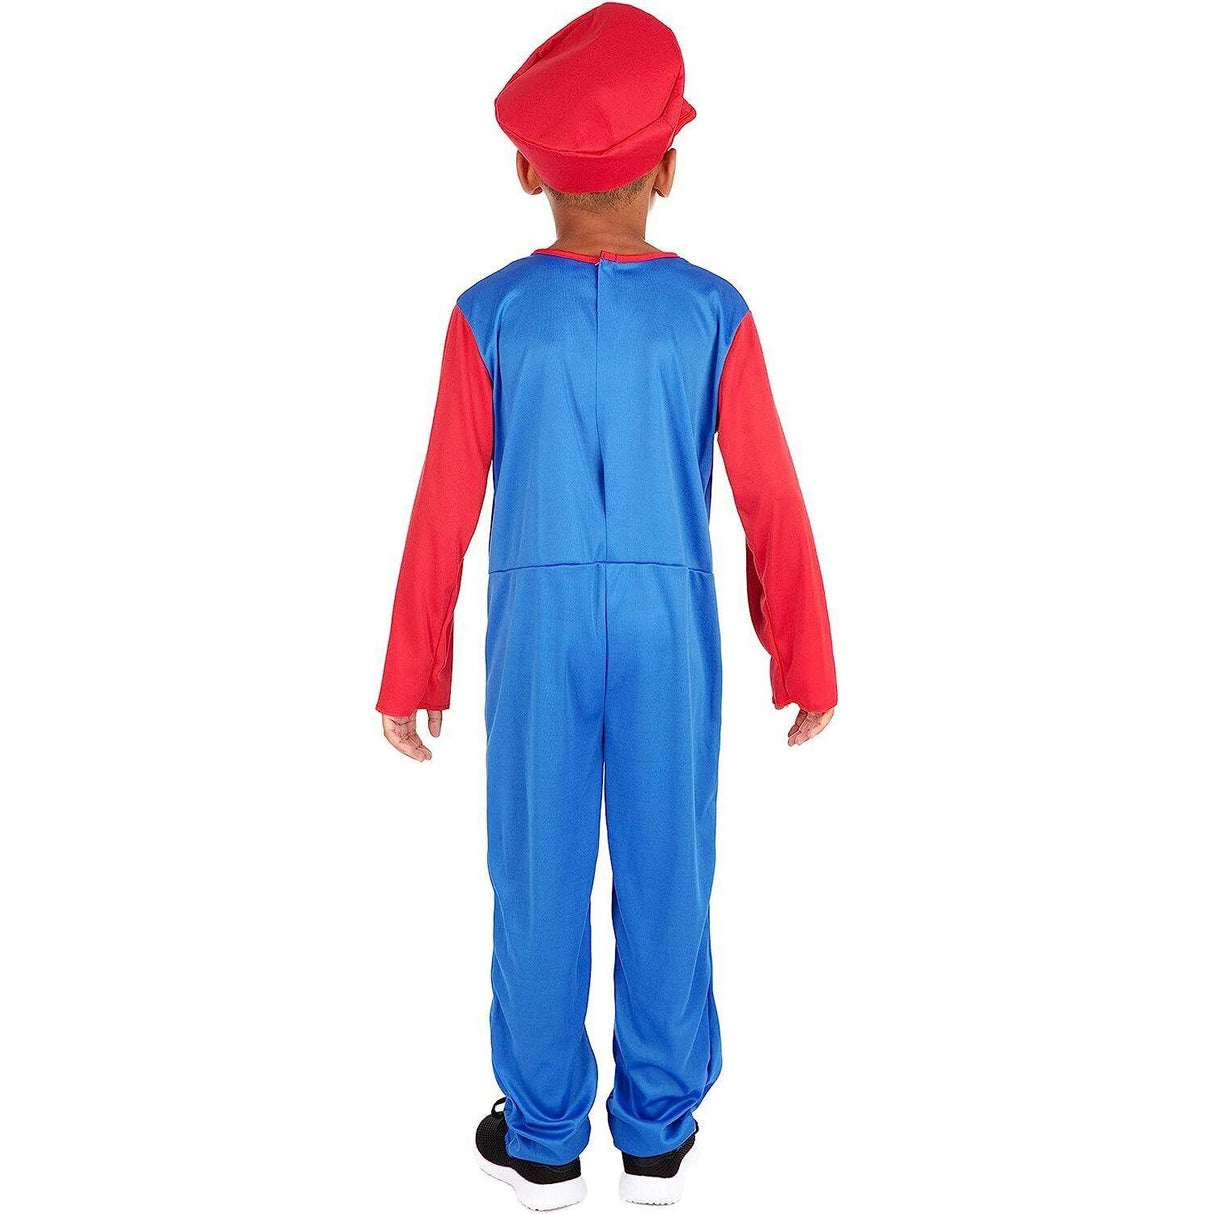 Bristol Novelty Italian Plumbers Mate Boy Costume - 8-10 Years